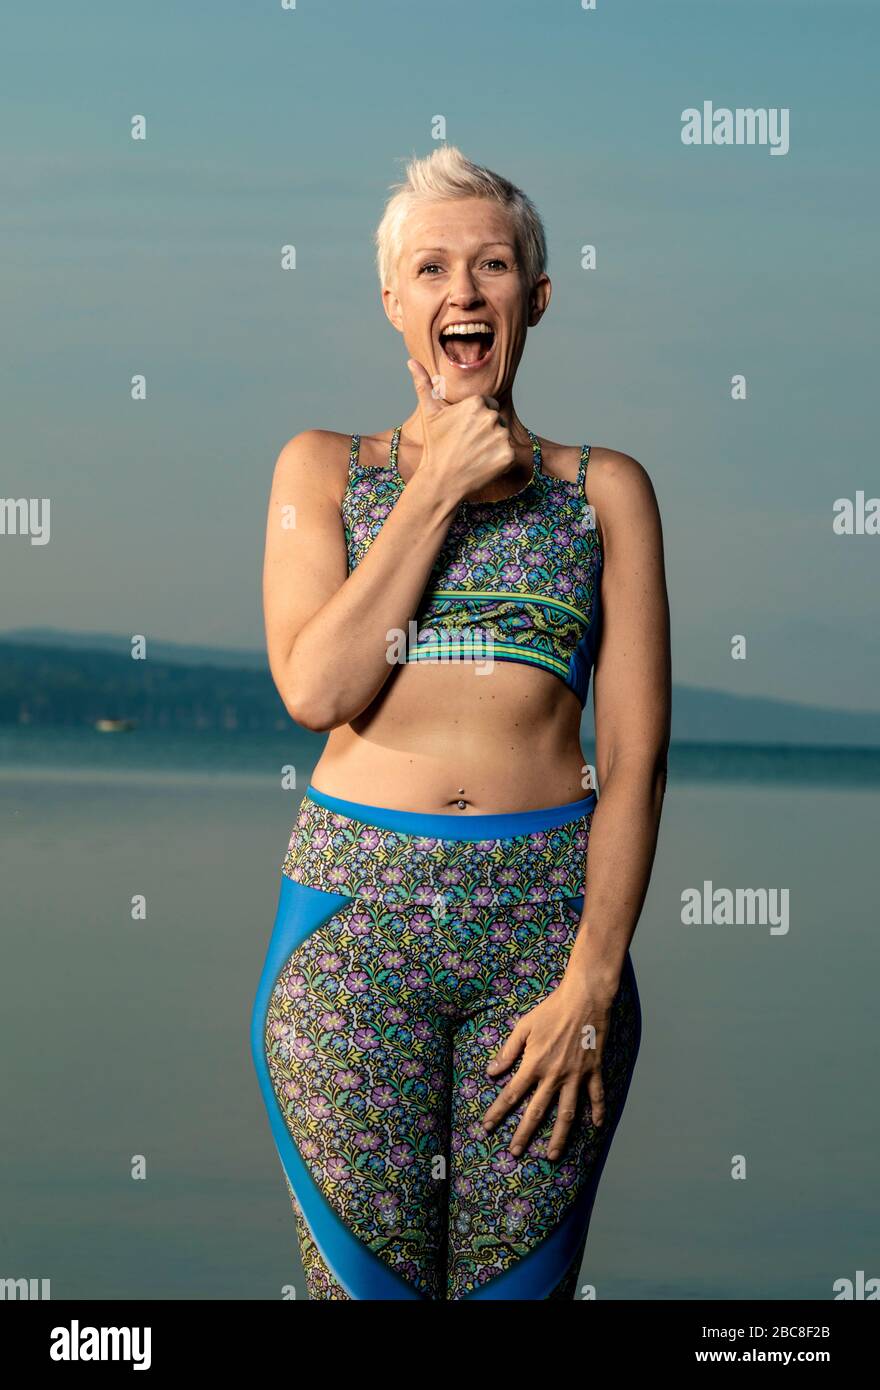 IKYA meditation, woman in sportswear cheerfully by the lake Stock Photo